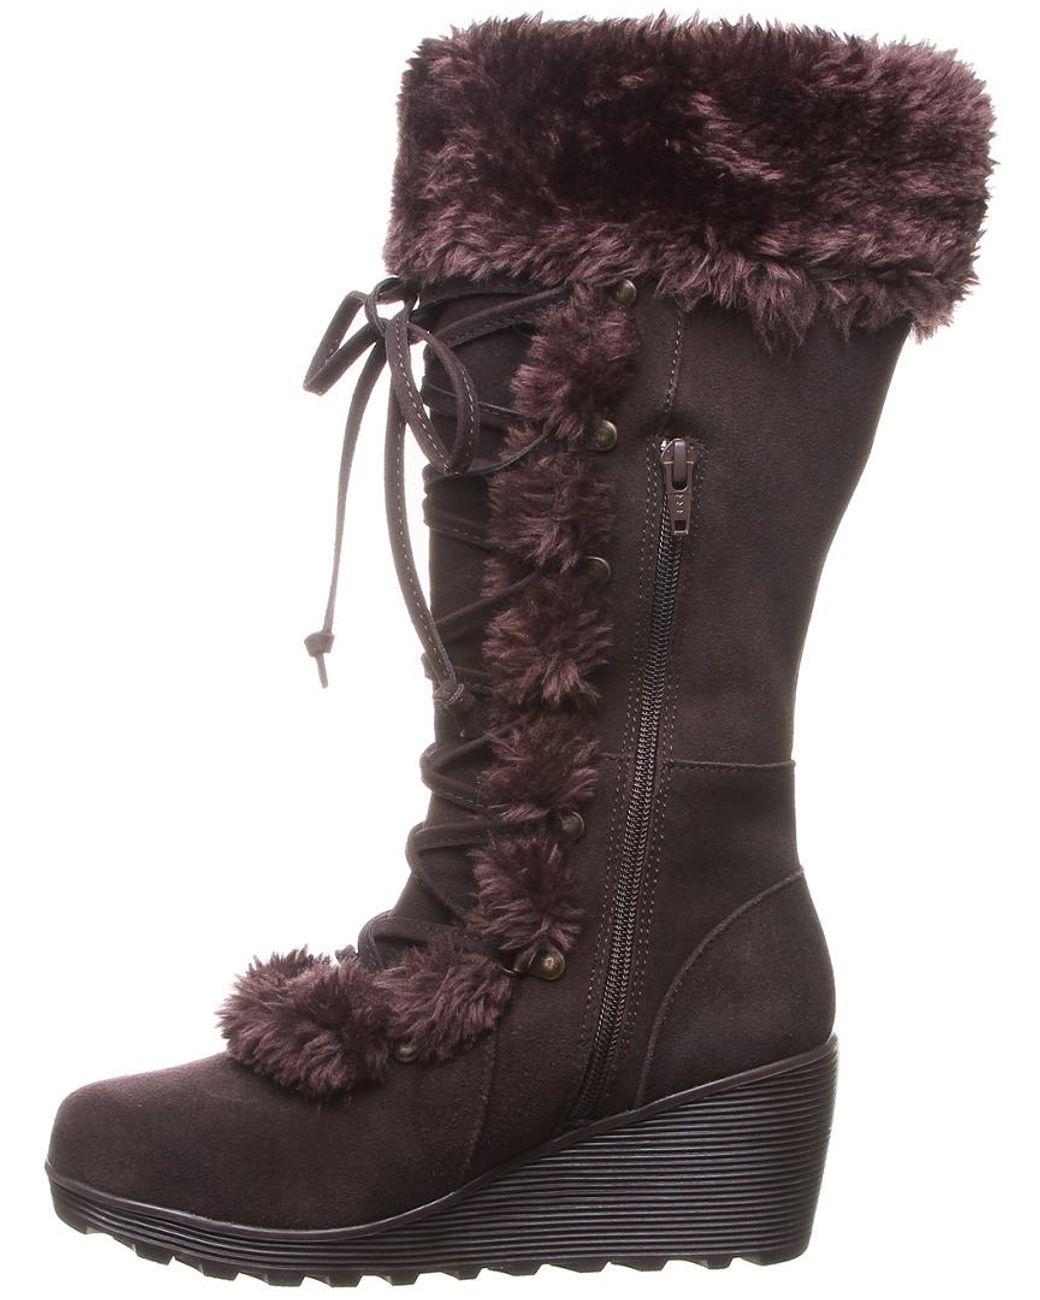 Bearpaw Women Boots Shoes Suede Dark Brown Chocolate 8" Faux Fur